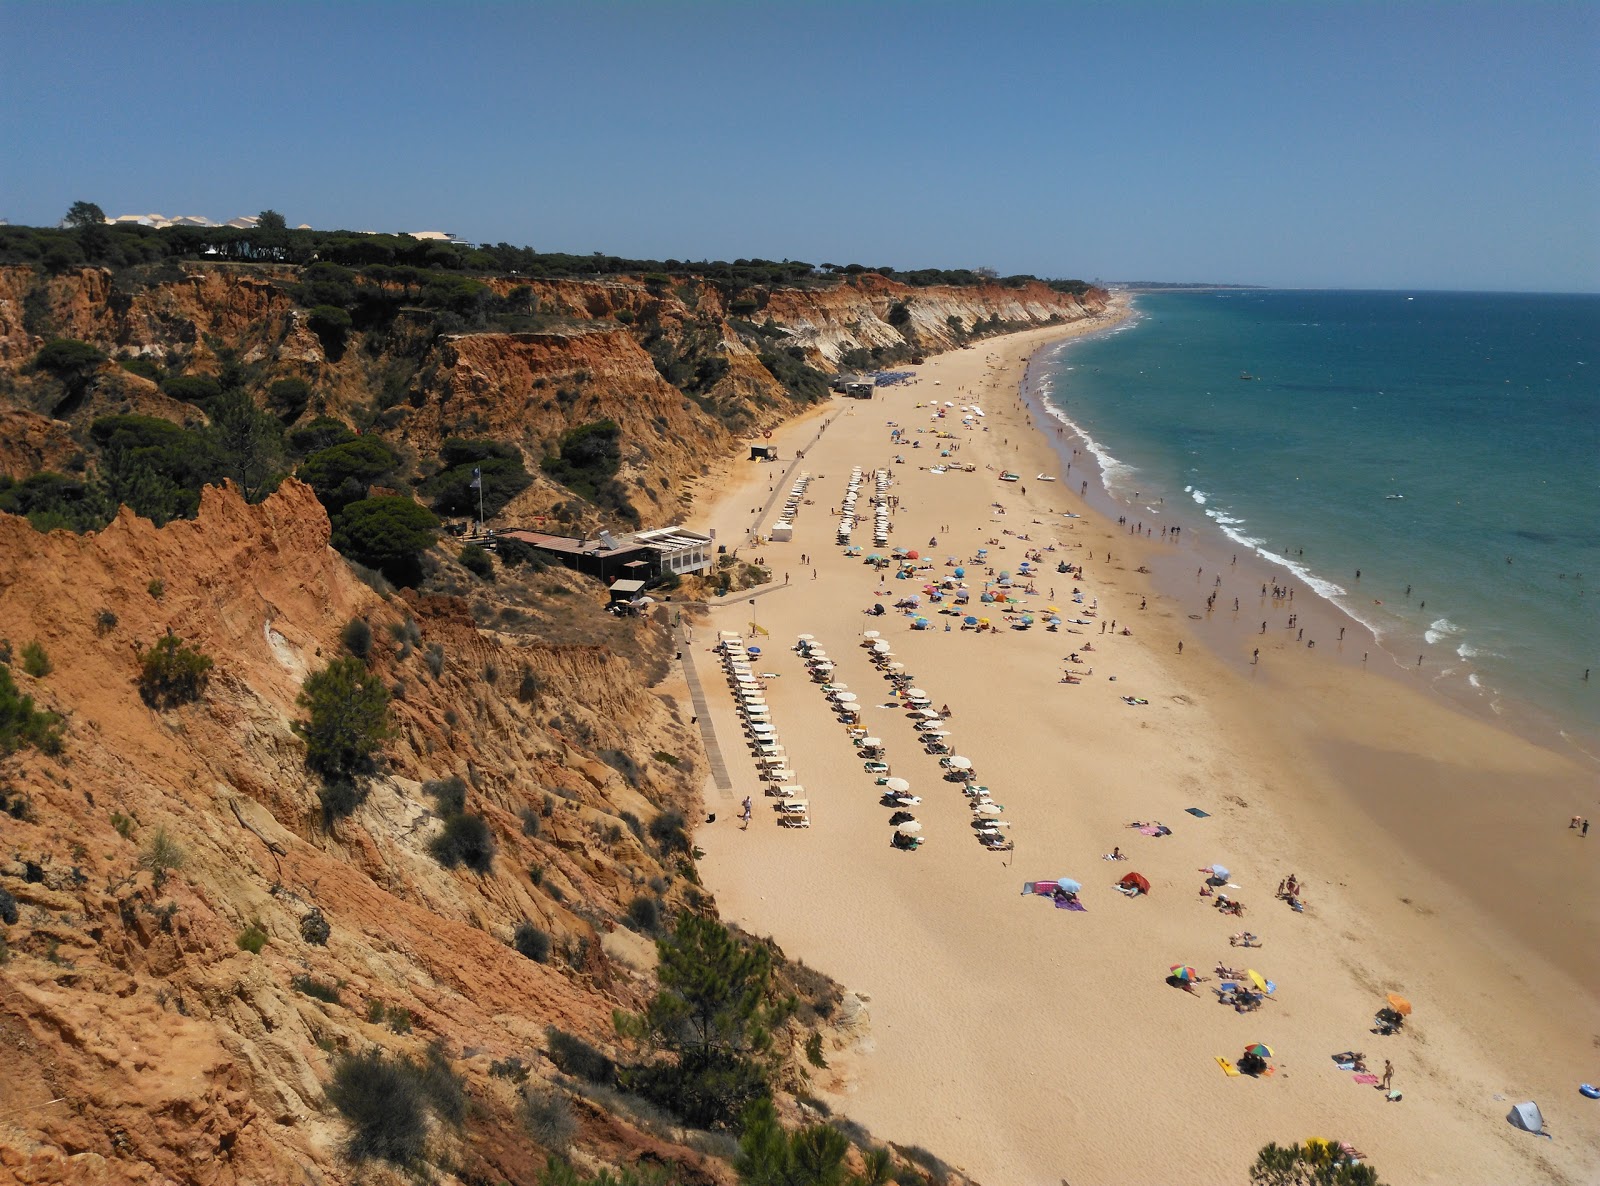 Photo of Praia da falesia with bright fine sand surface